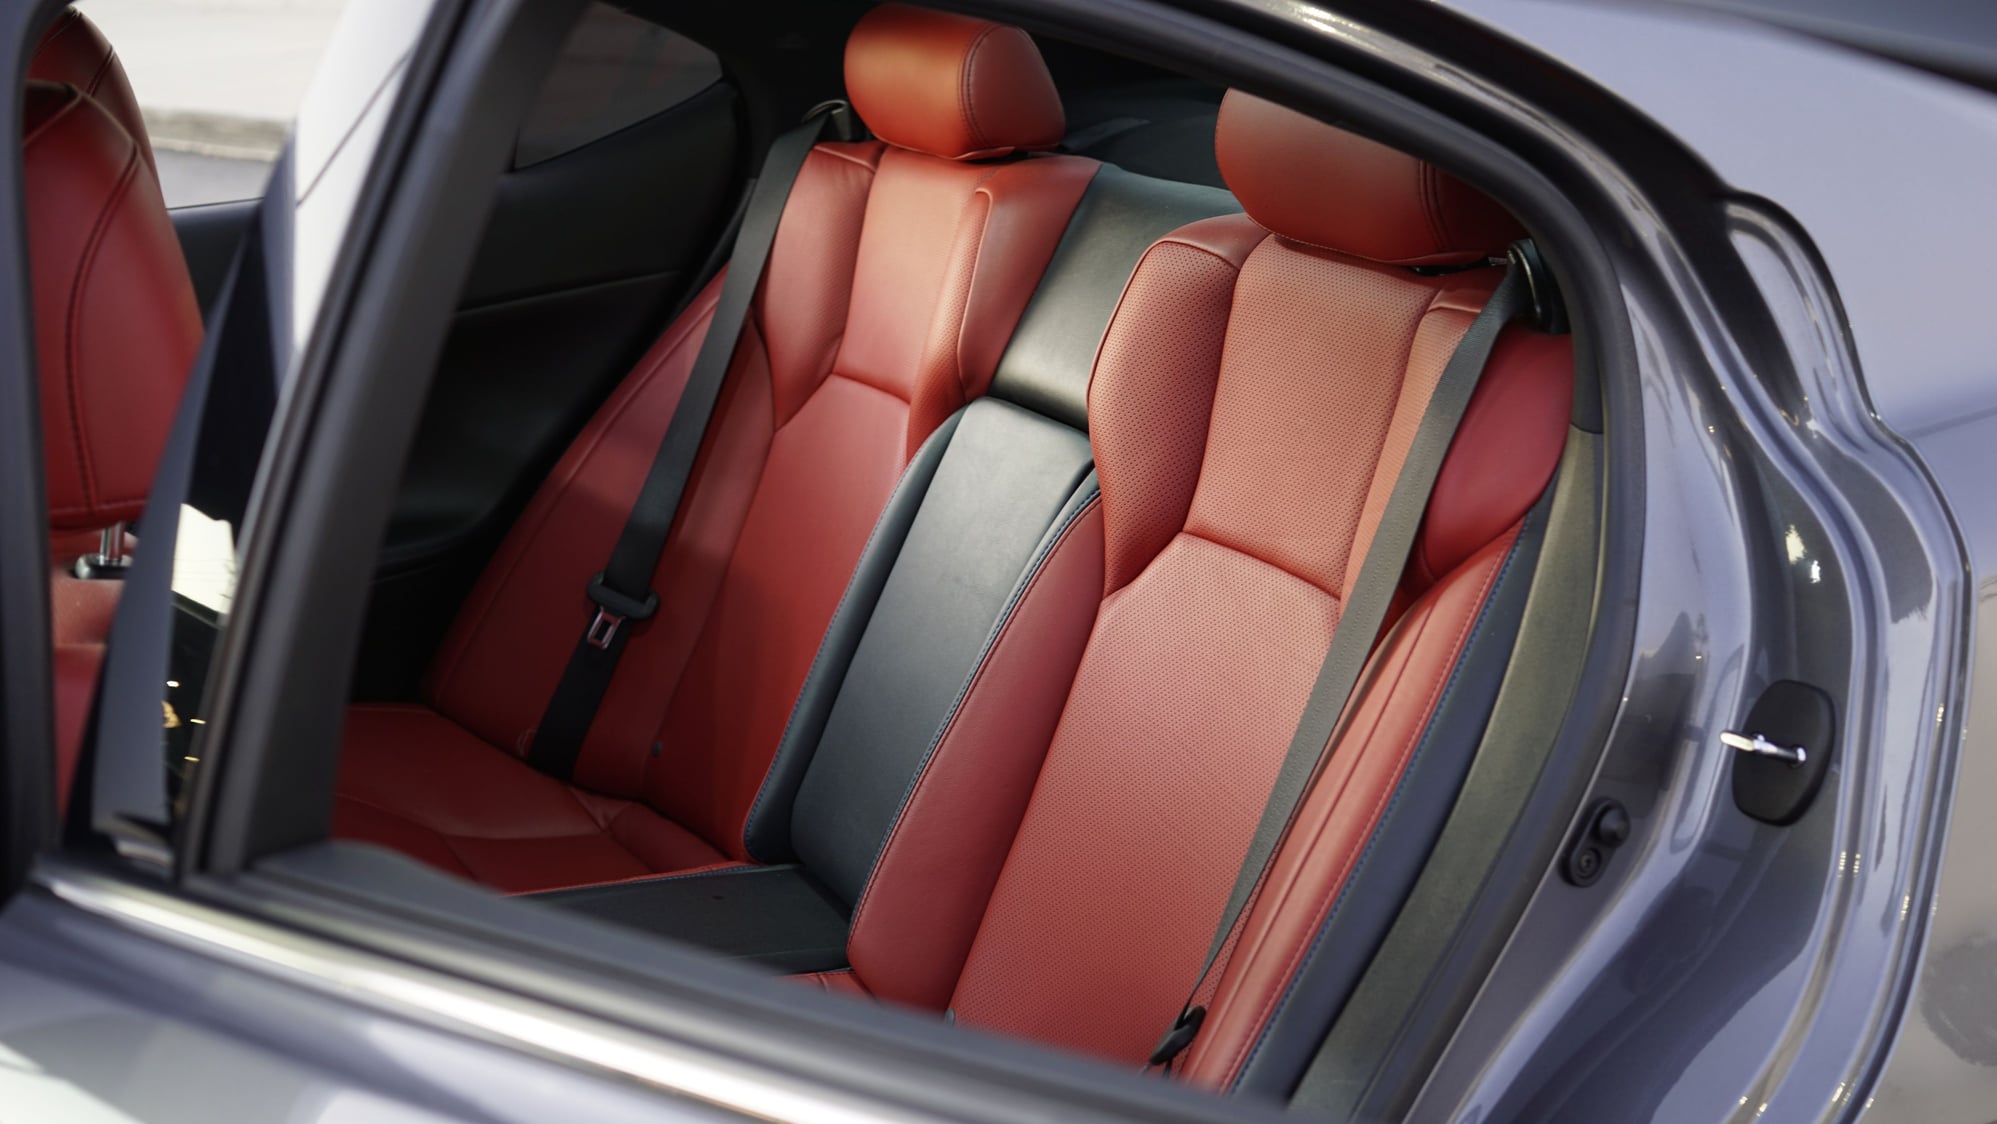 2012 Lexus IS F - Mint 2012 IS-F 59k miles Nebula Gray w/ RED interior - Used - VIN JTHBP5C21C5010489 - 60,000 Miles - 8 cyl - 2WD - Automatic - Sedan - Gray - Covina, CA 91723, United States